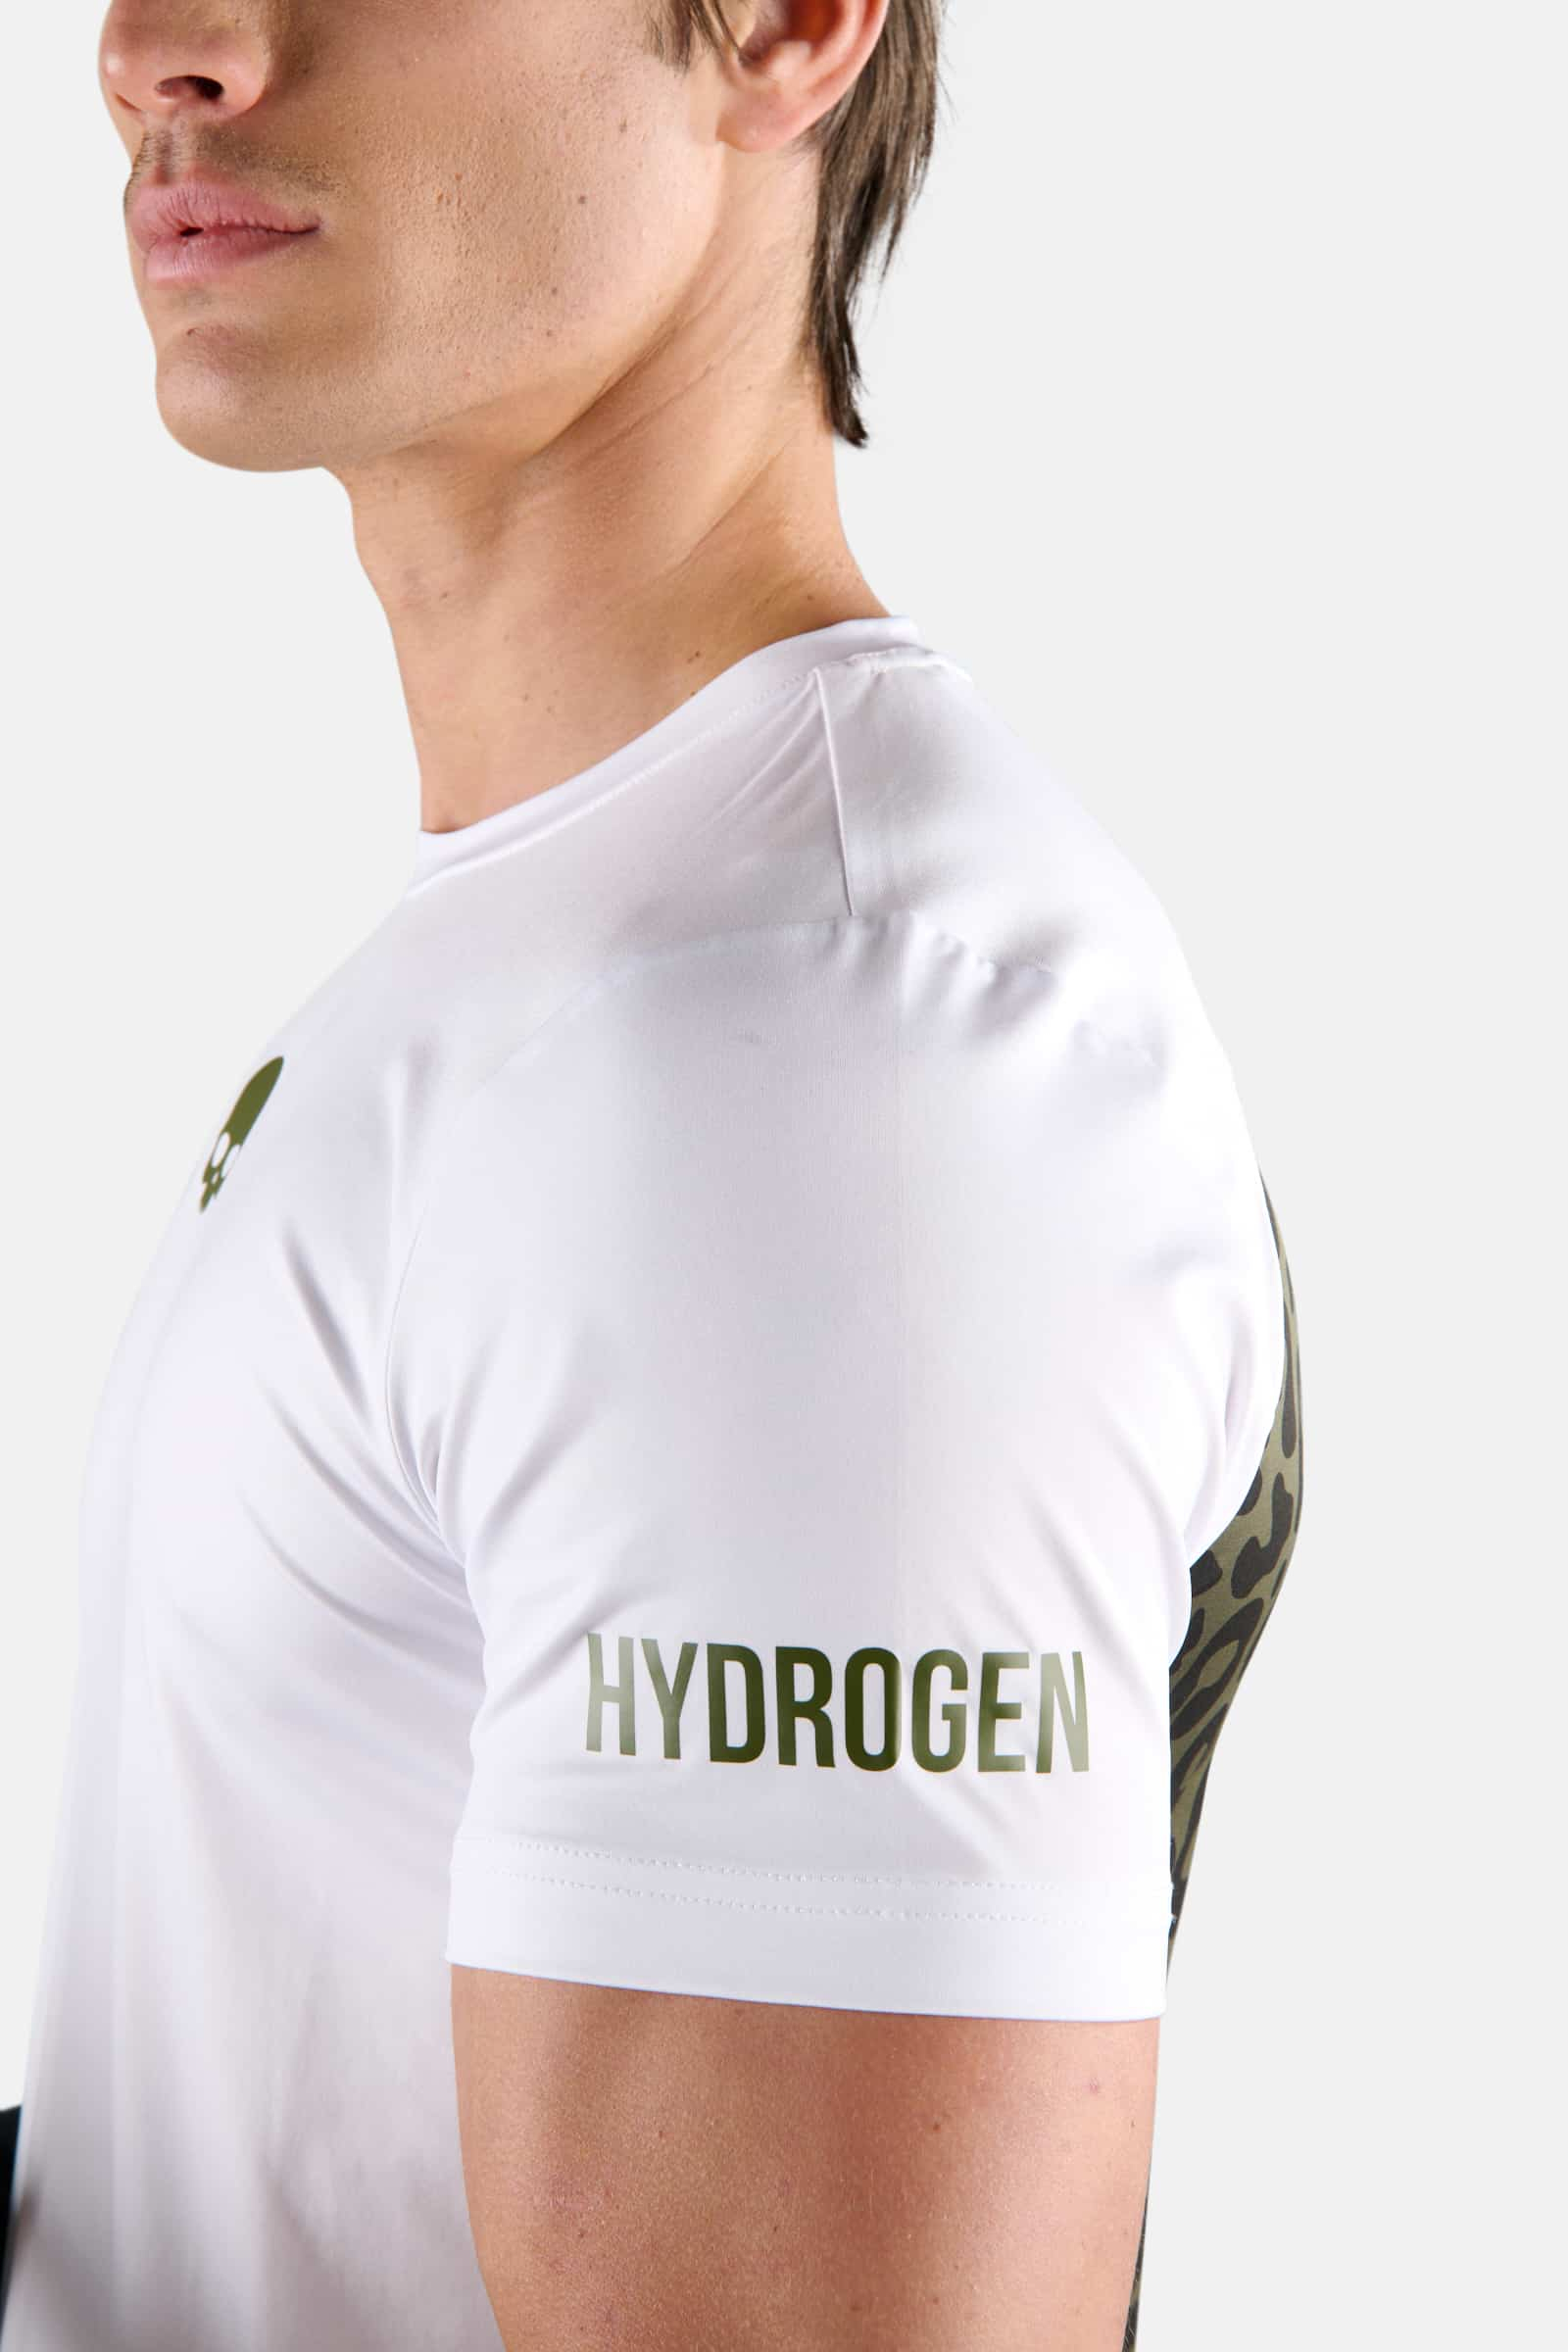 PANTHER TECH TEE - WHITE,MILITARY GREEN - Hydrogen - Luxury Sportwear